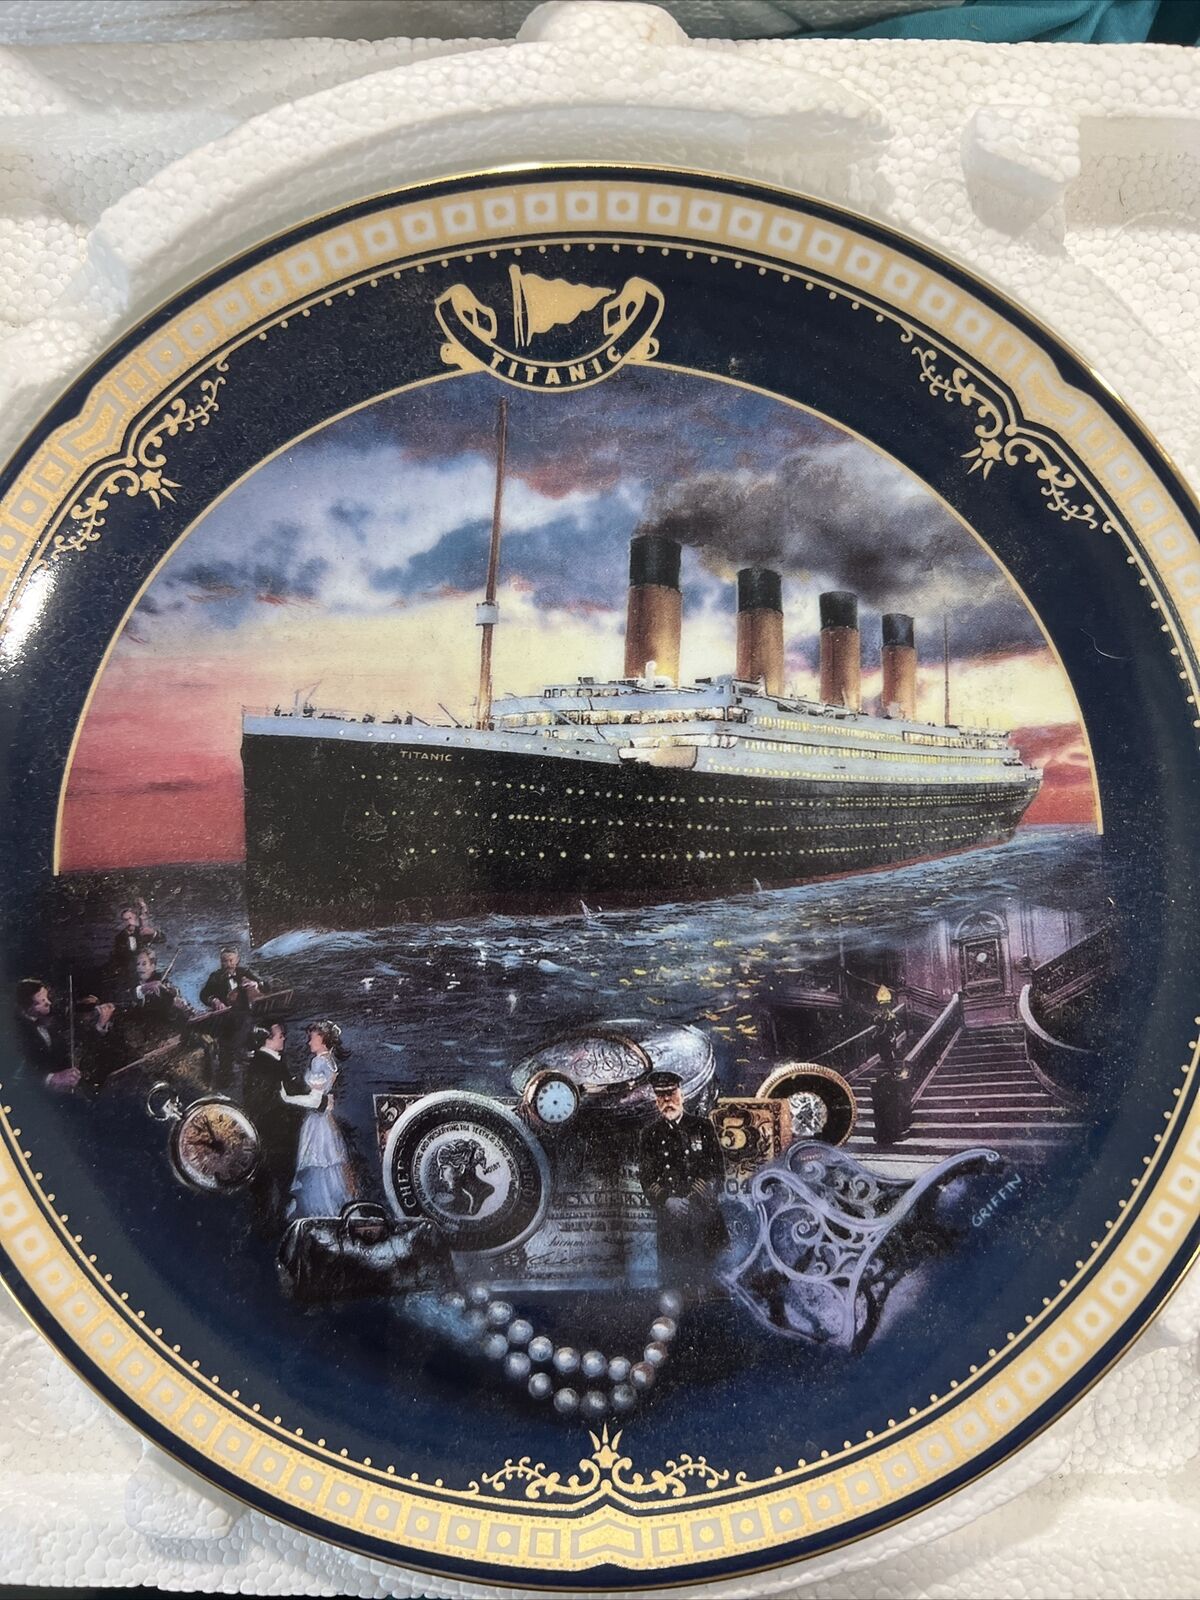 Titanic Queen of the Ocean Collector Plate - Maiden Voyage